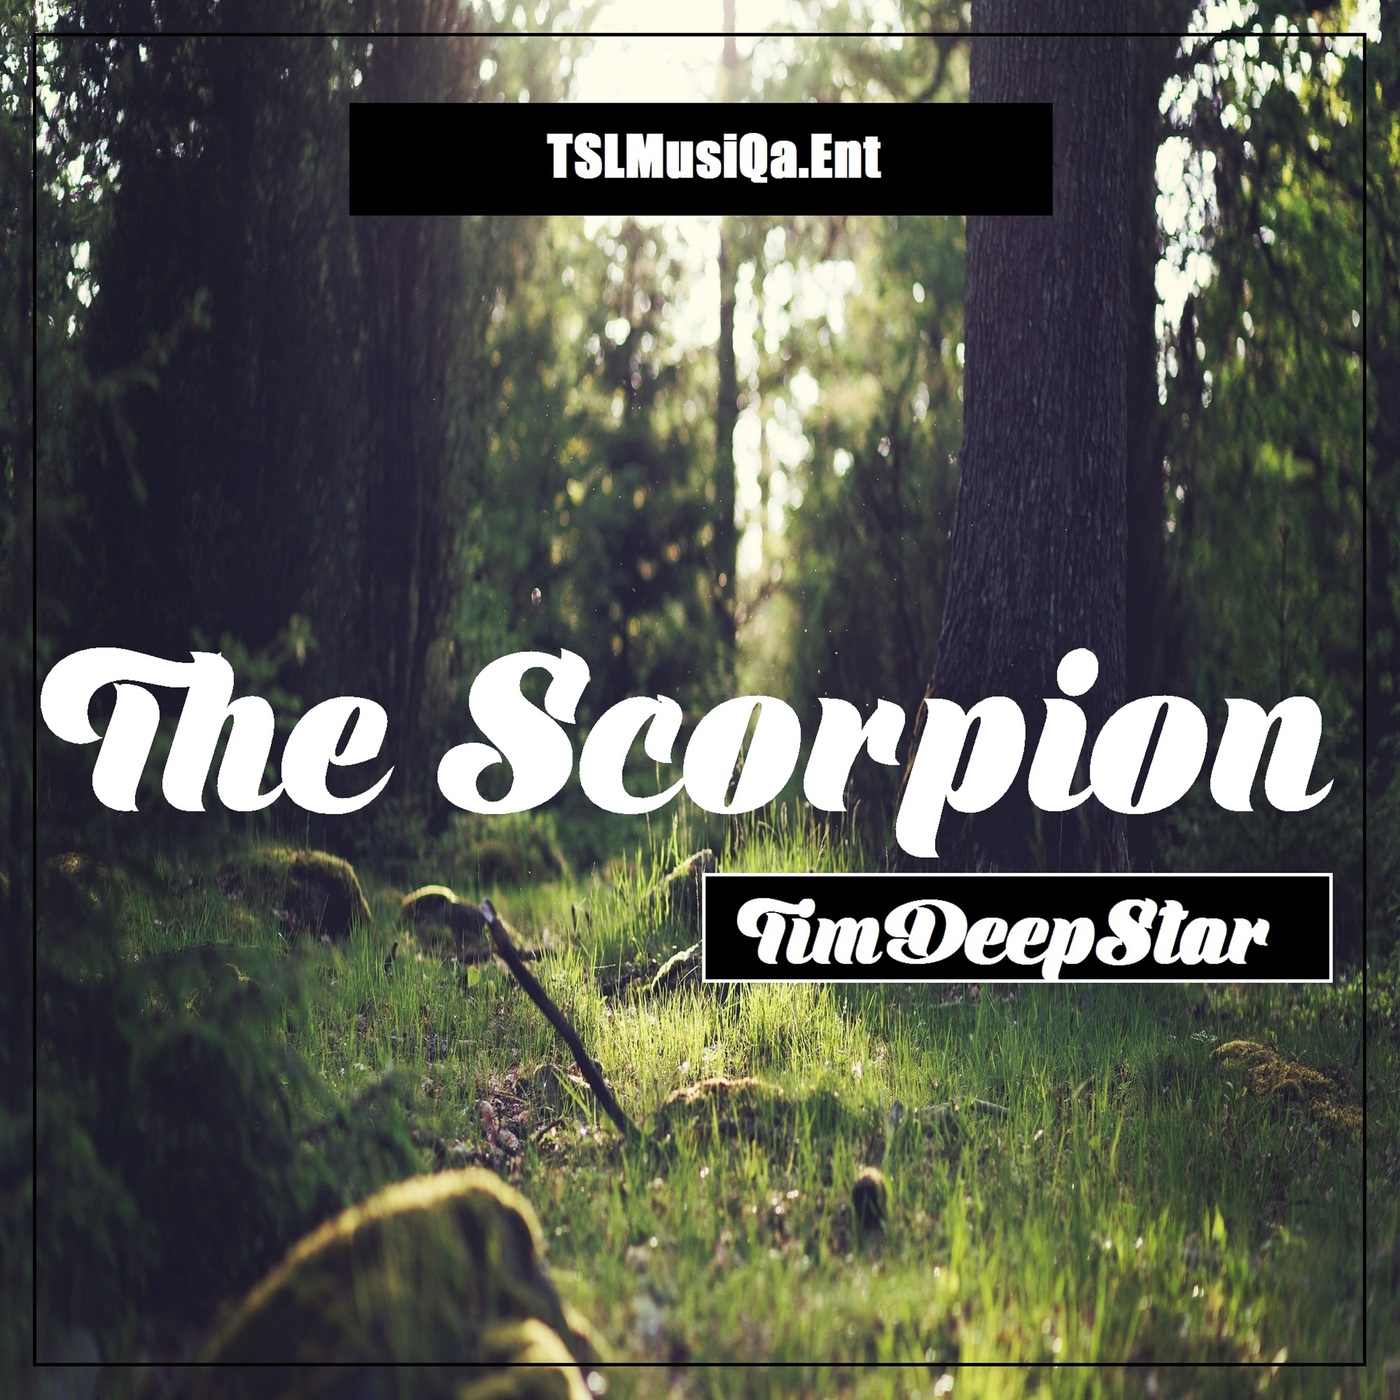 TimDeepStar - The Scorpion / TSLMusiQa.Ent